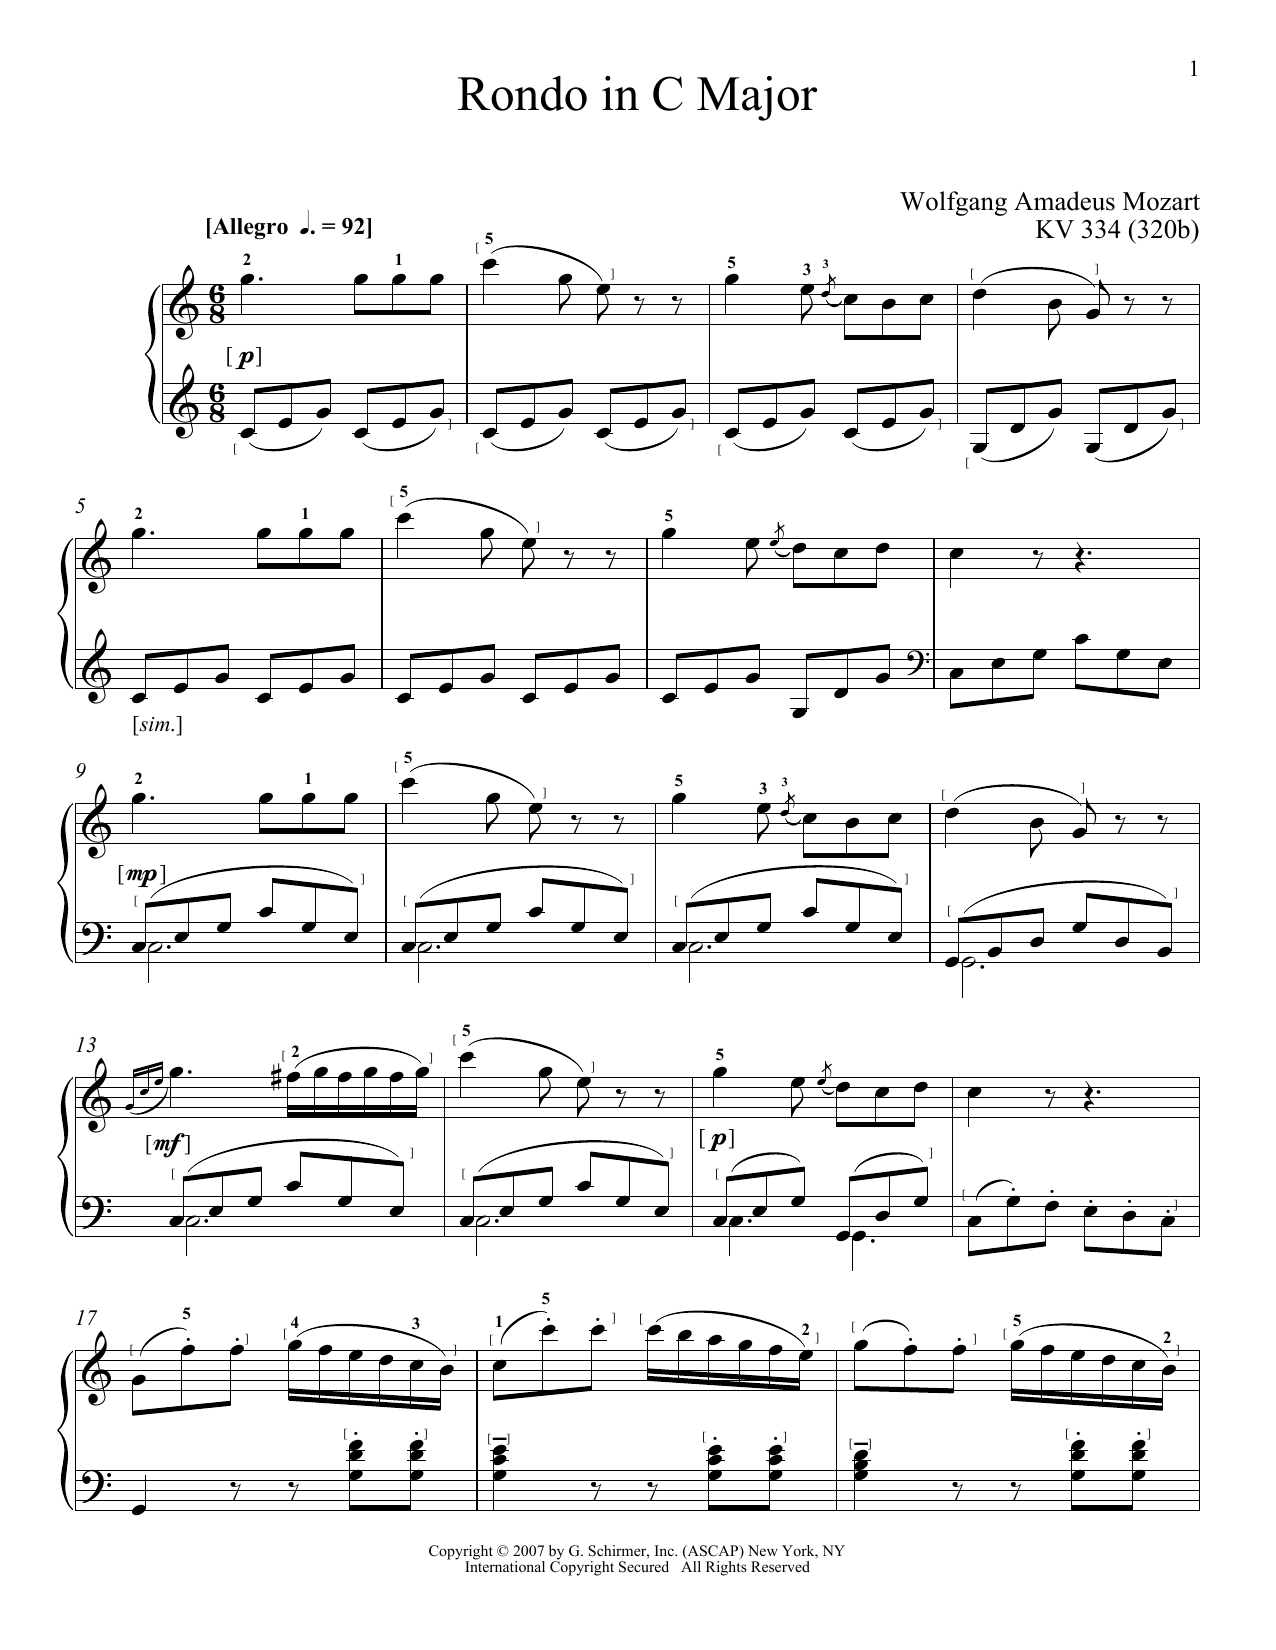 Wolfgang Amadeus Mozart Rondo In C Major Sheet Music Notes & Chords for Guitar Tab - Download or Print PDF